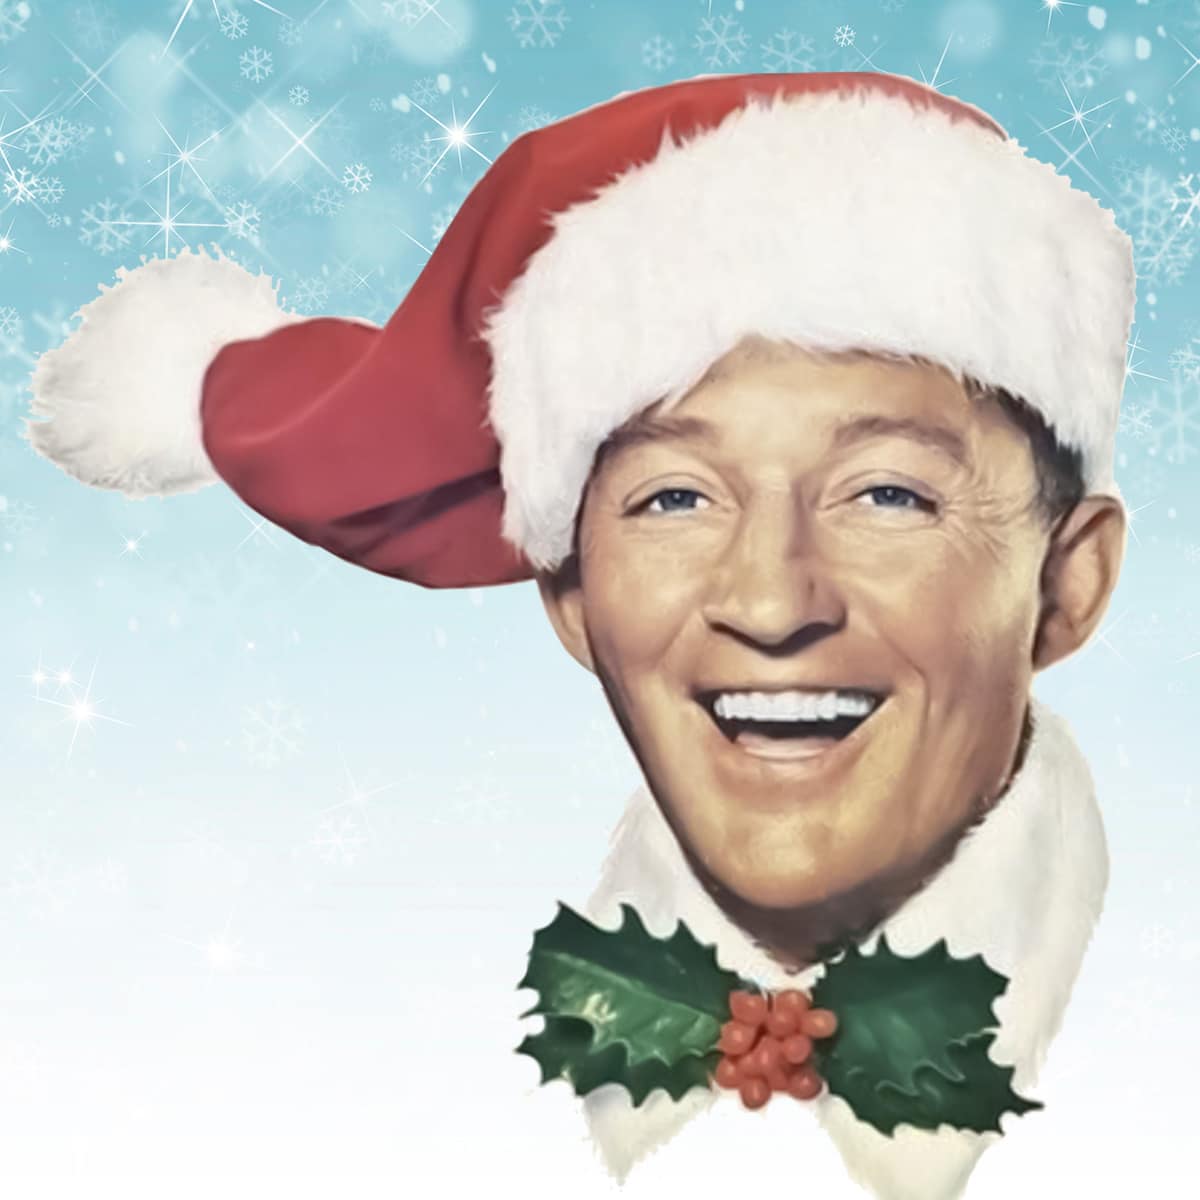 Bing Crosby in Christmas Attire